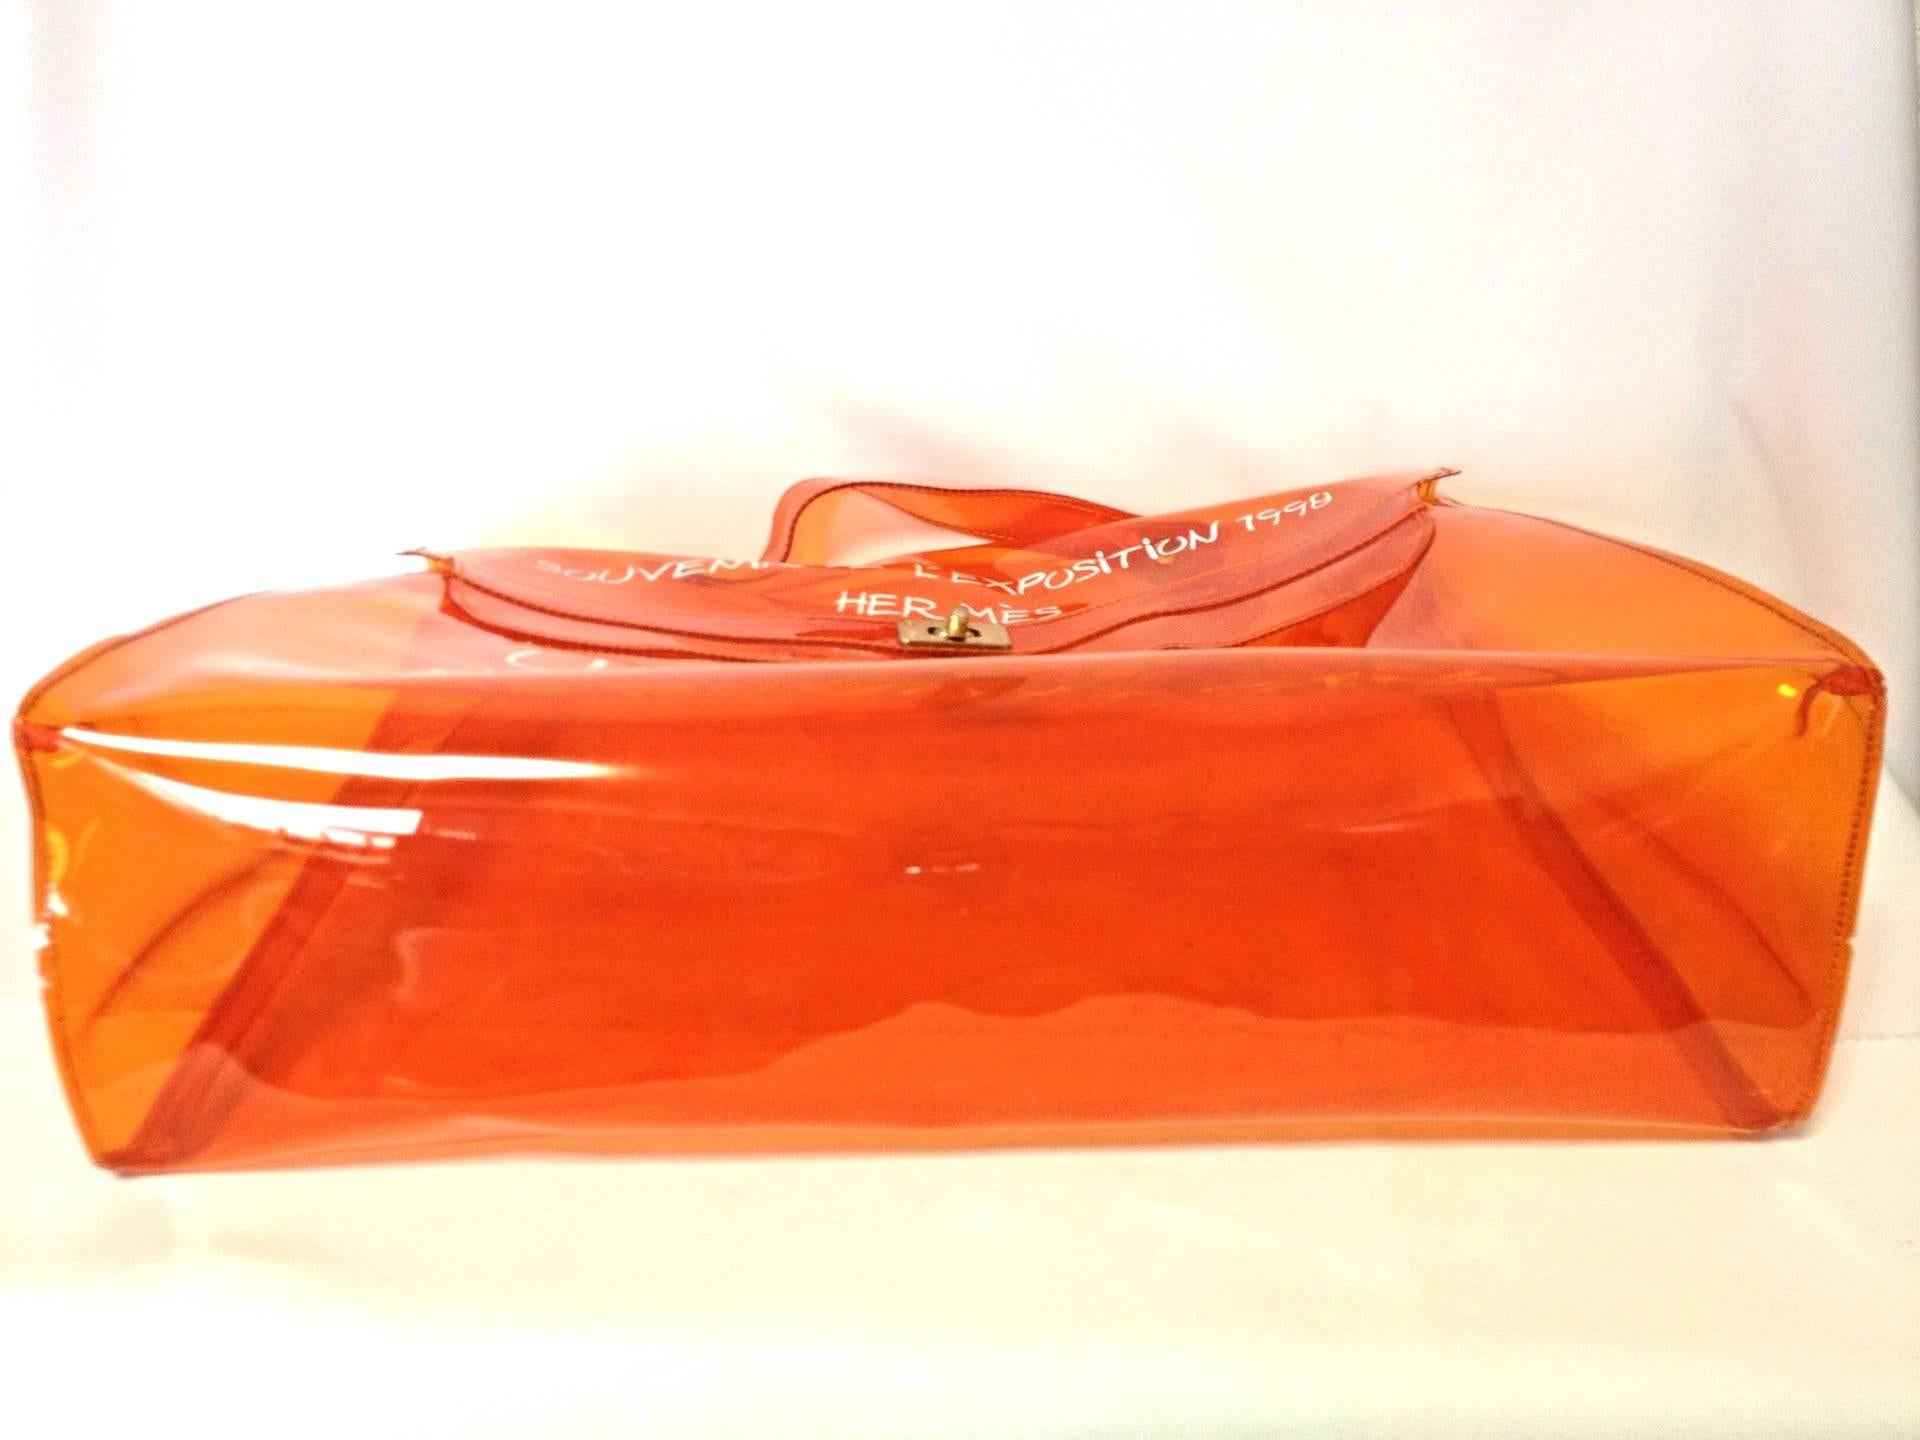 MINT condition. Hermes a rare transparent Vintage orange vinyl Kelly bag 2